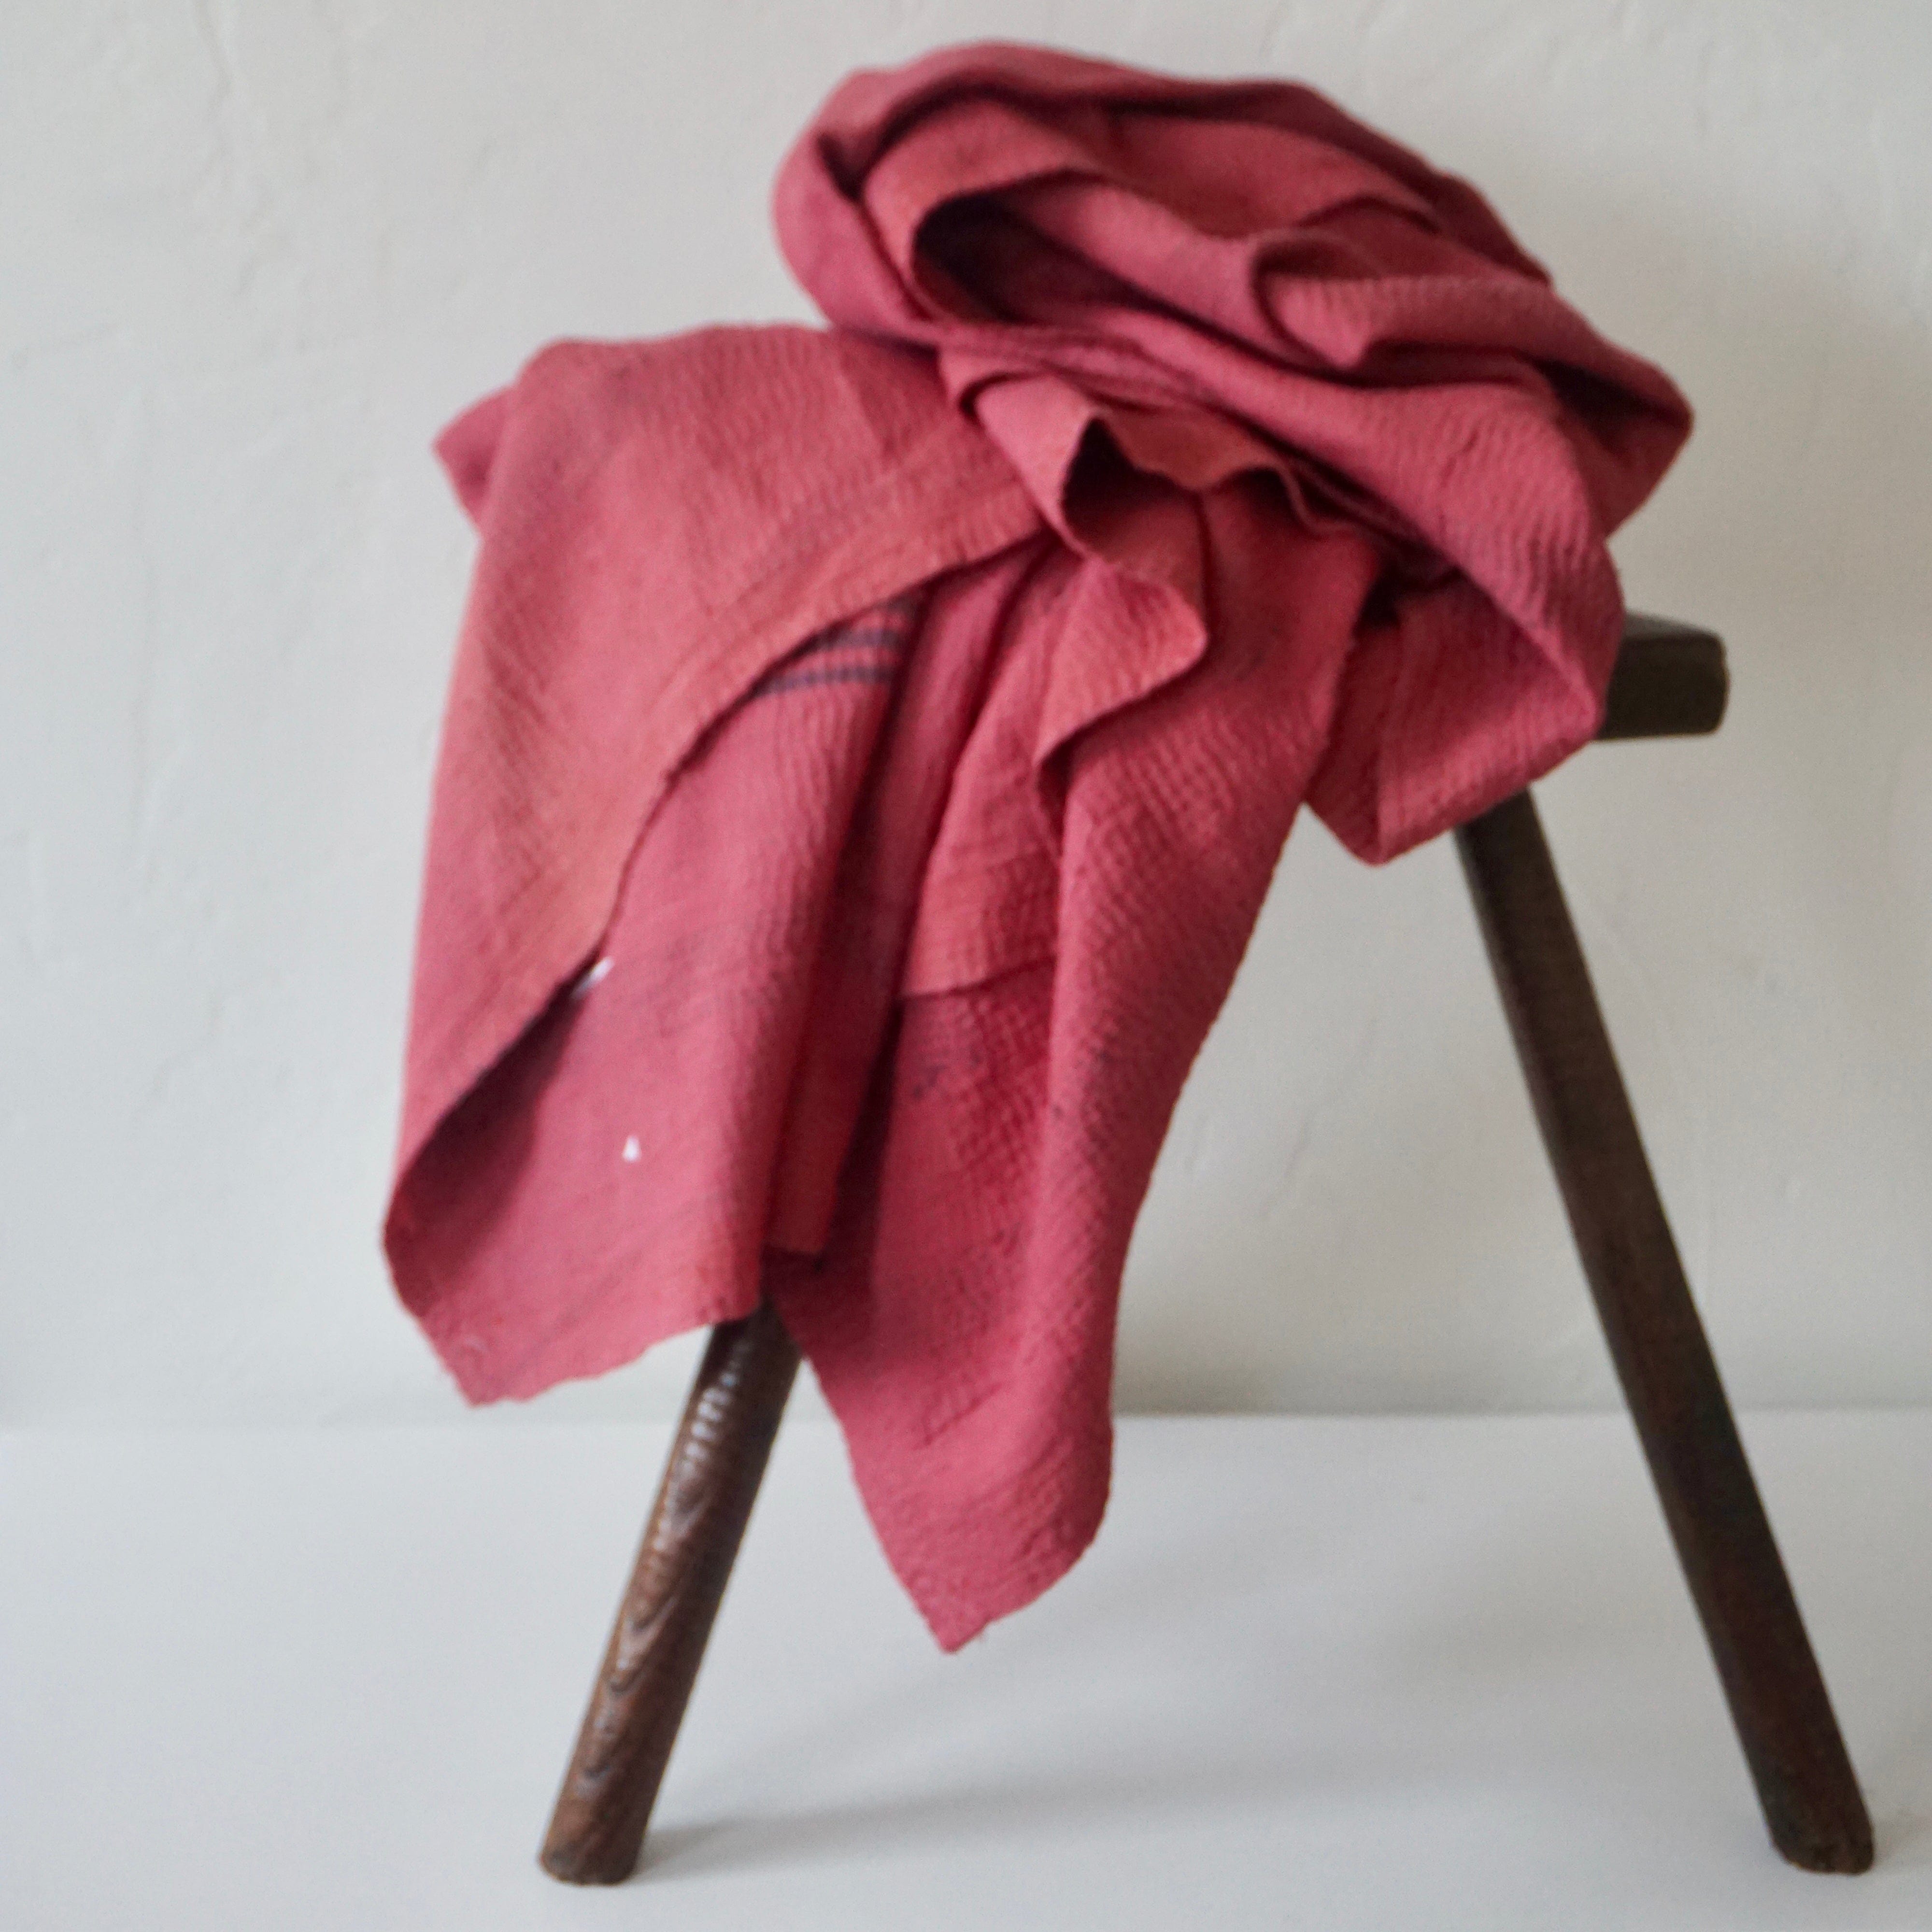 Studio Caleidoscope Decor, Linens, blankets Vintage Kantha Quilts